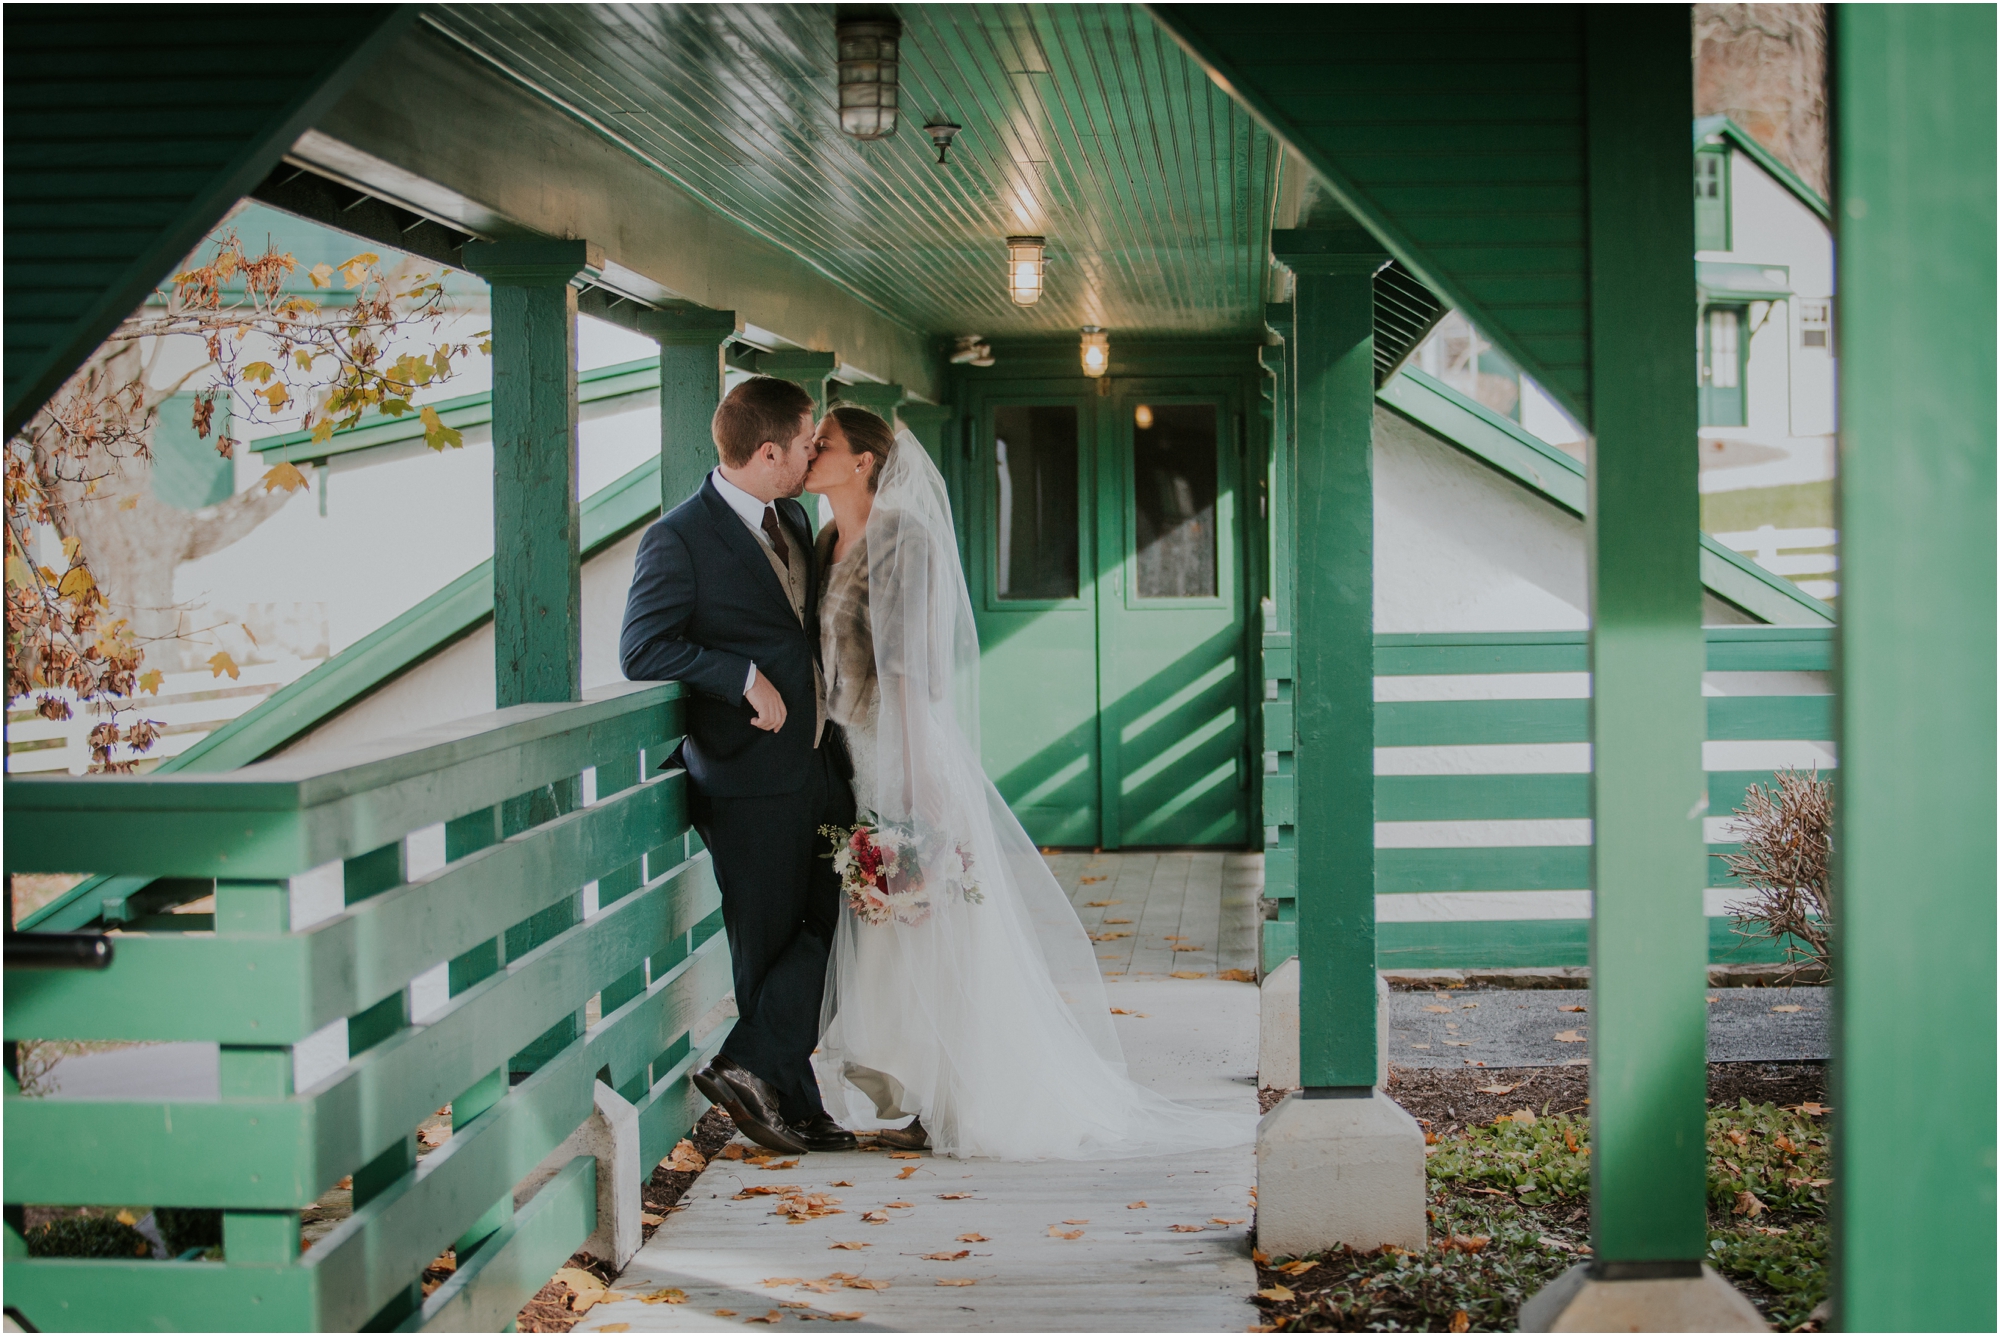 warm-springs-old-dairy-virginia-rustic-wedding-northeast-tennessee-elopement-adventuruous-photographer-katy-sergent_0035.jpg